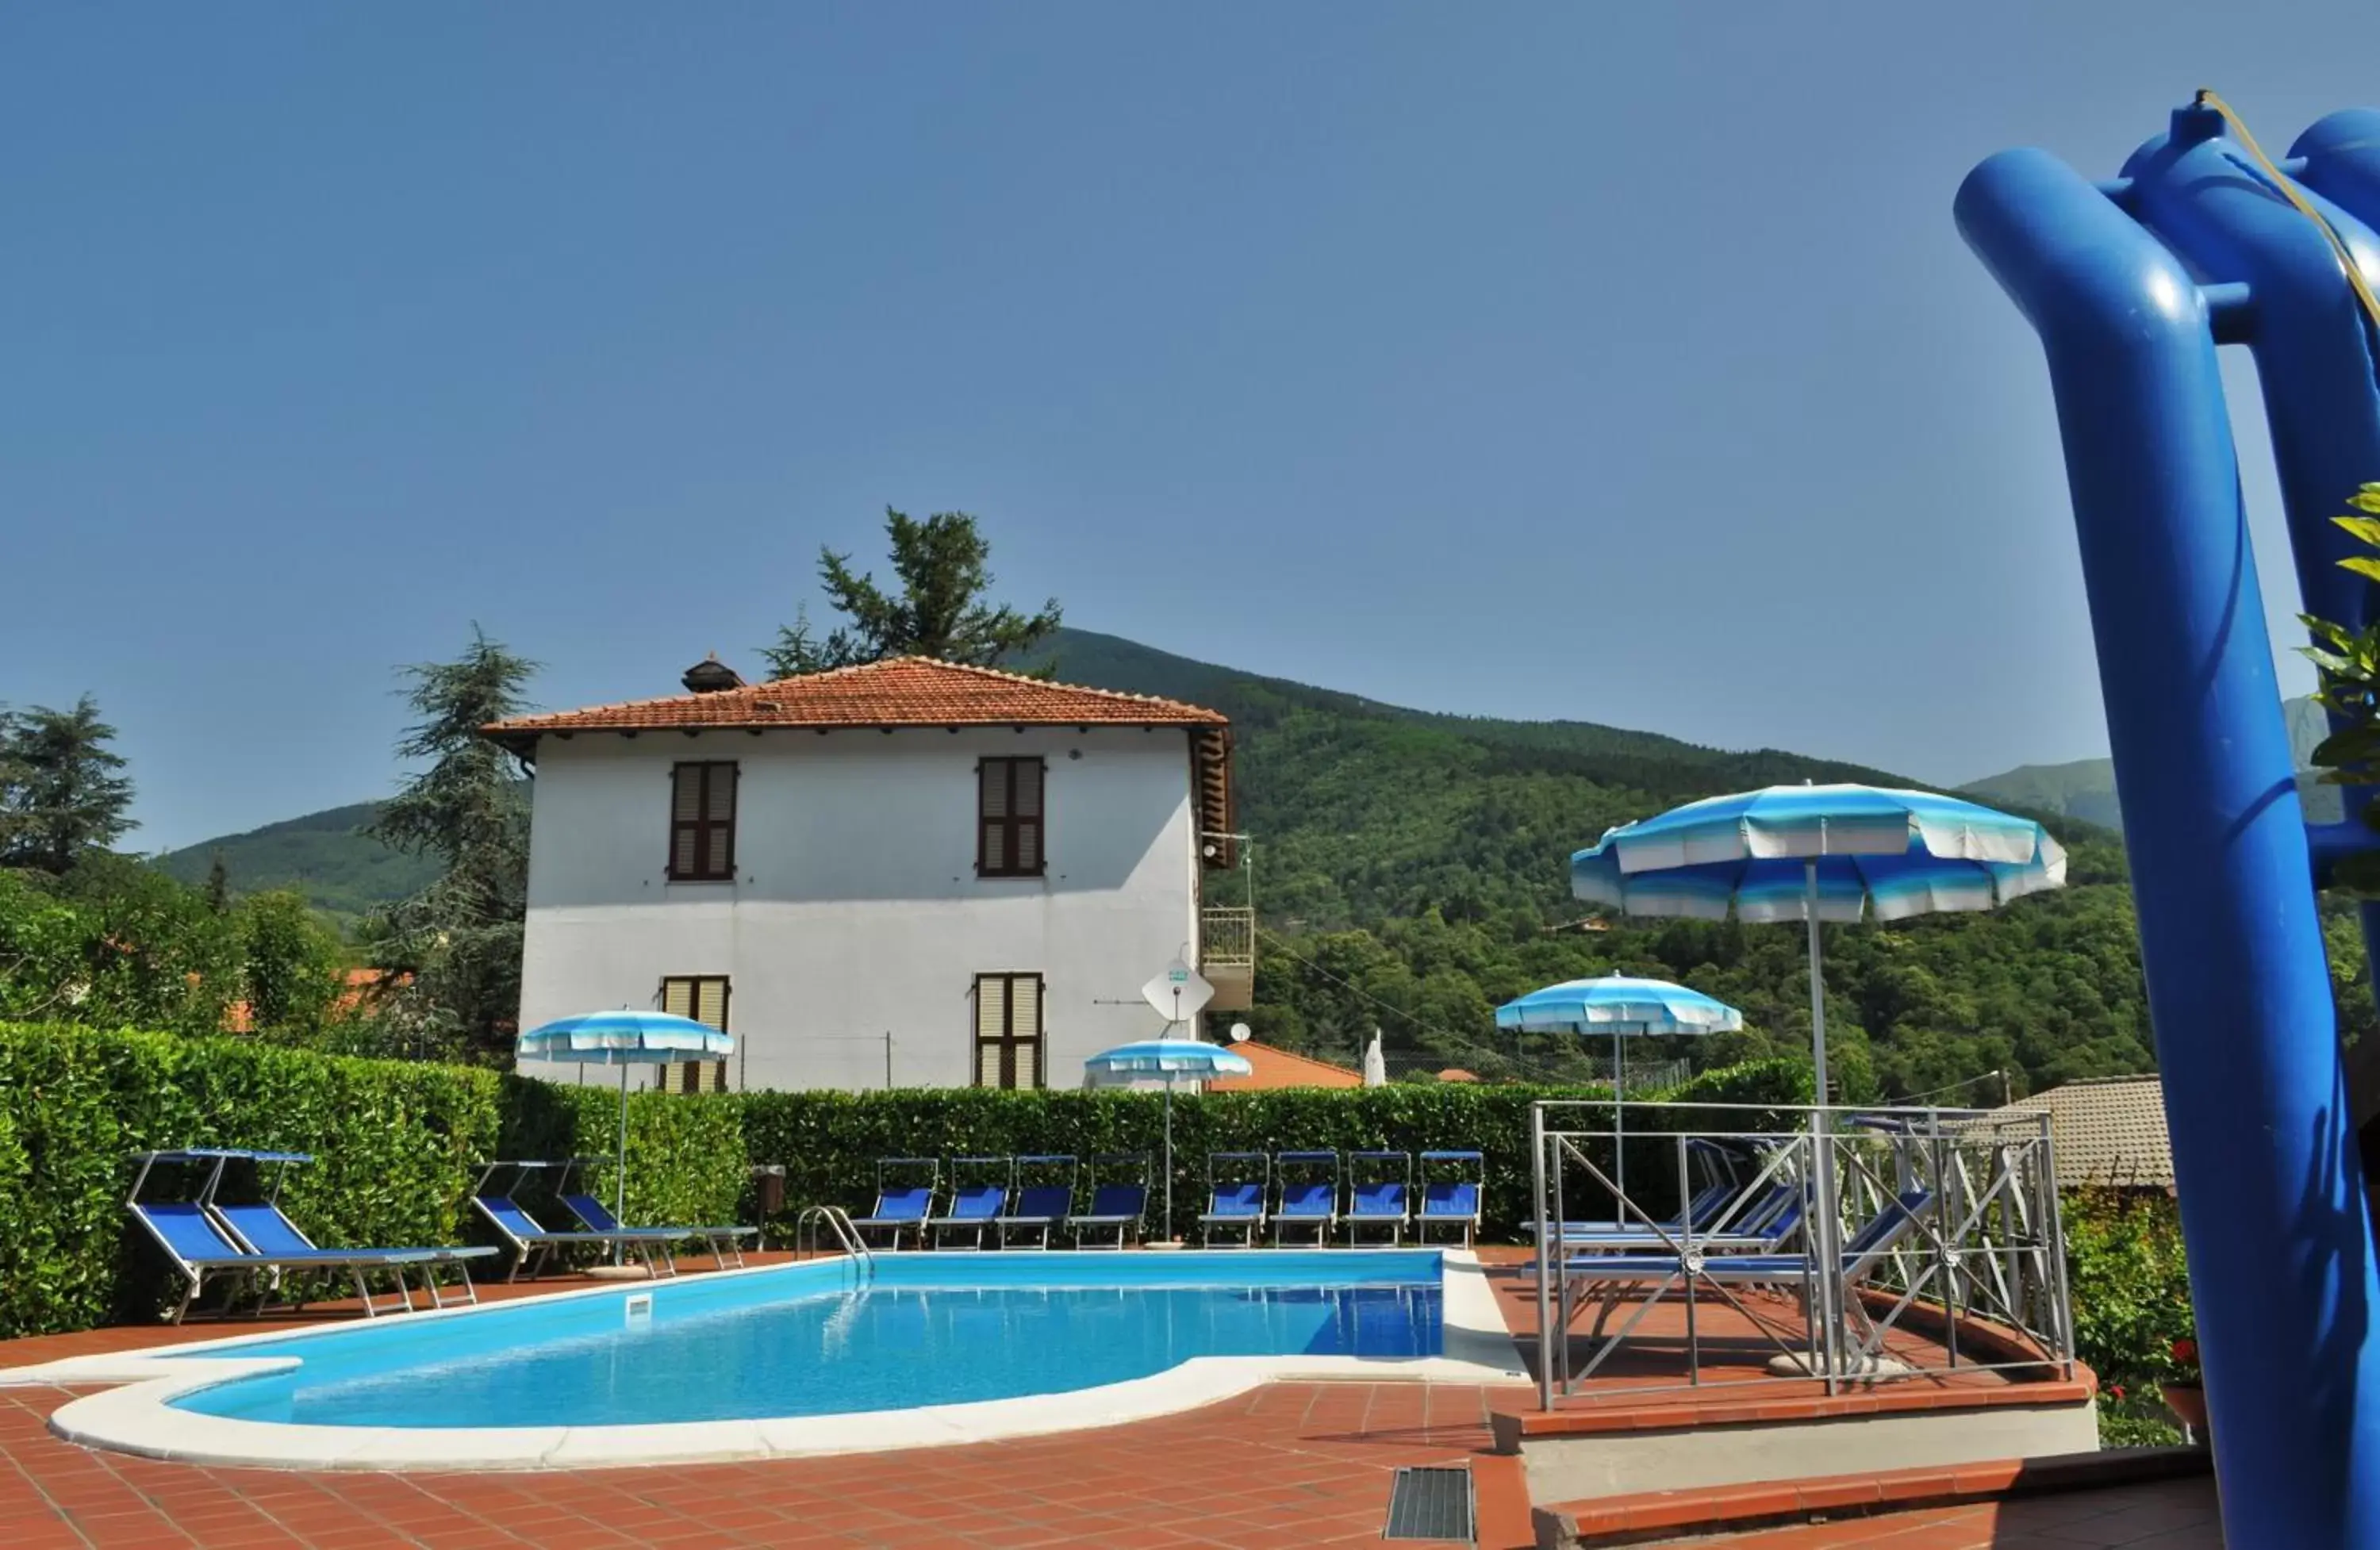 Swimming Pool in Albergo Miramonti